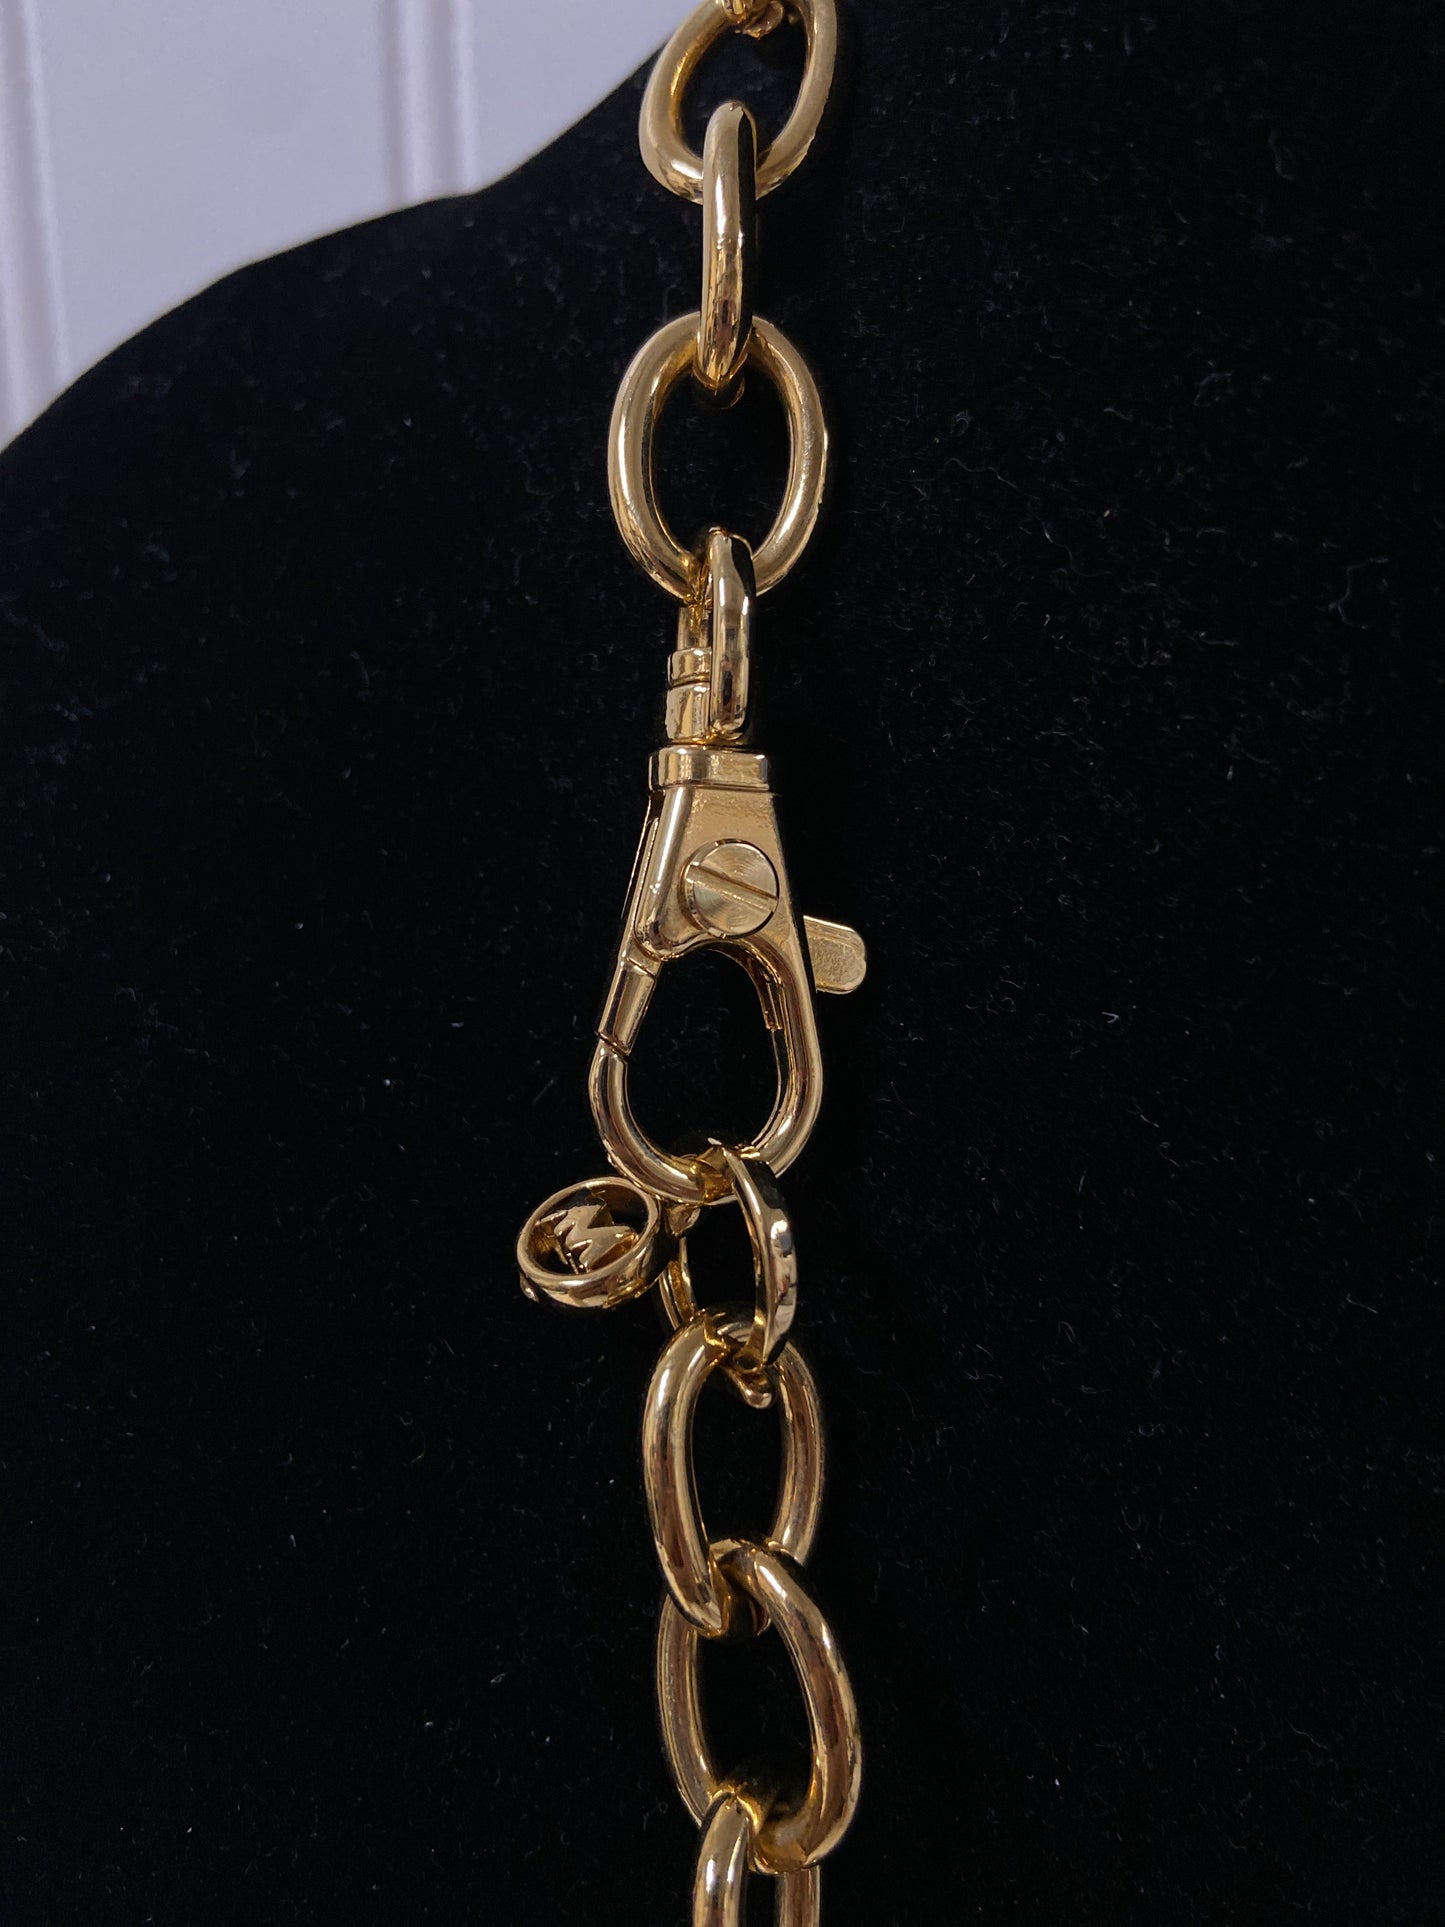 Necklace Designer By Michael Kors